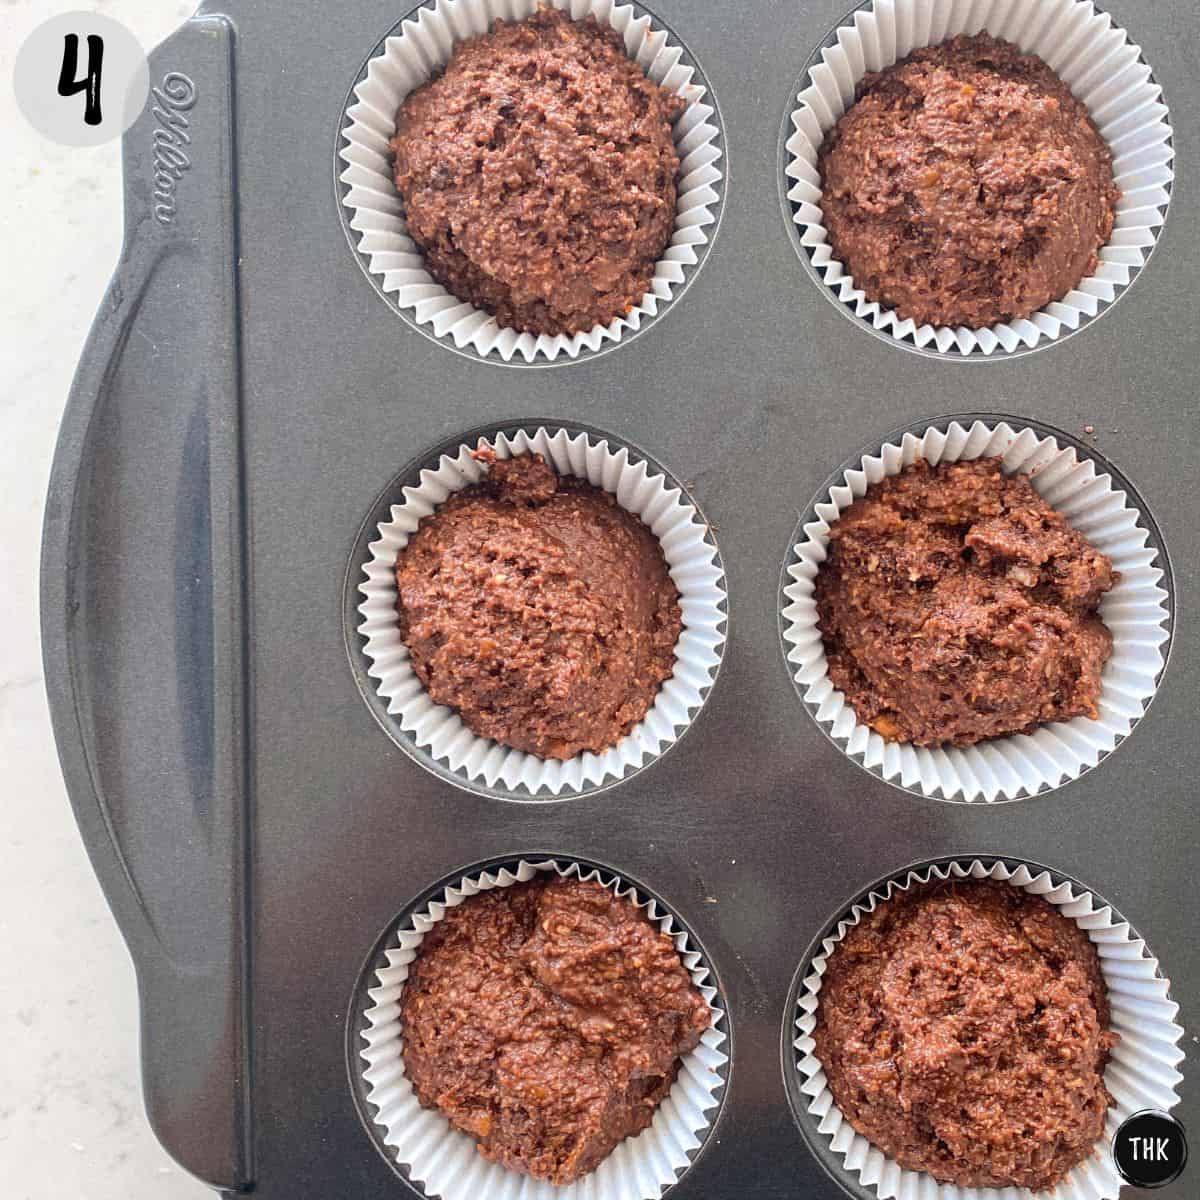 Raw cupcake batter in muffin pan before baking.